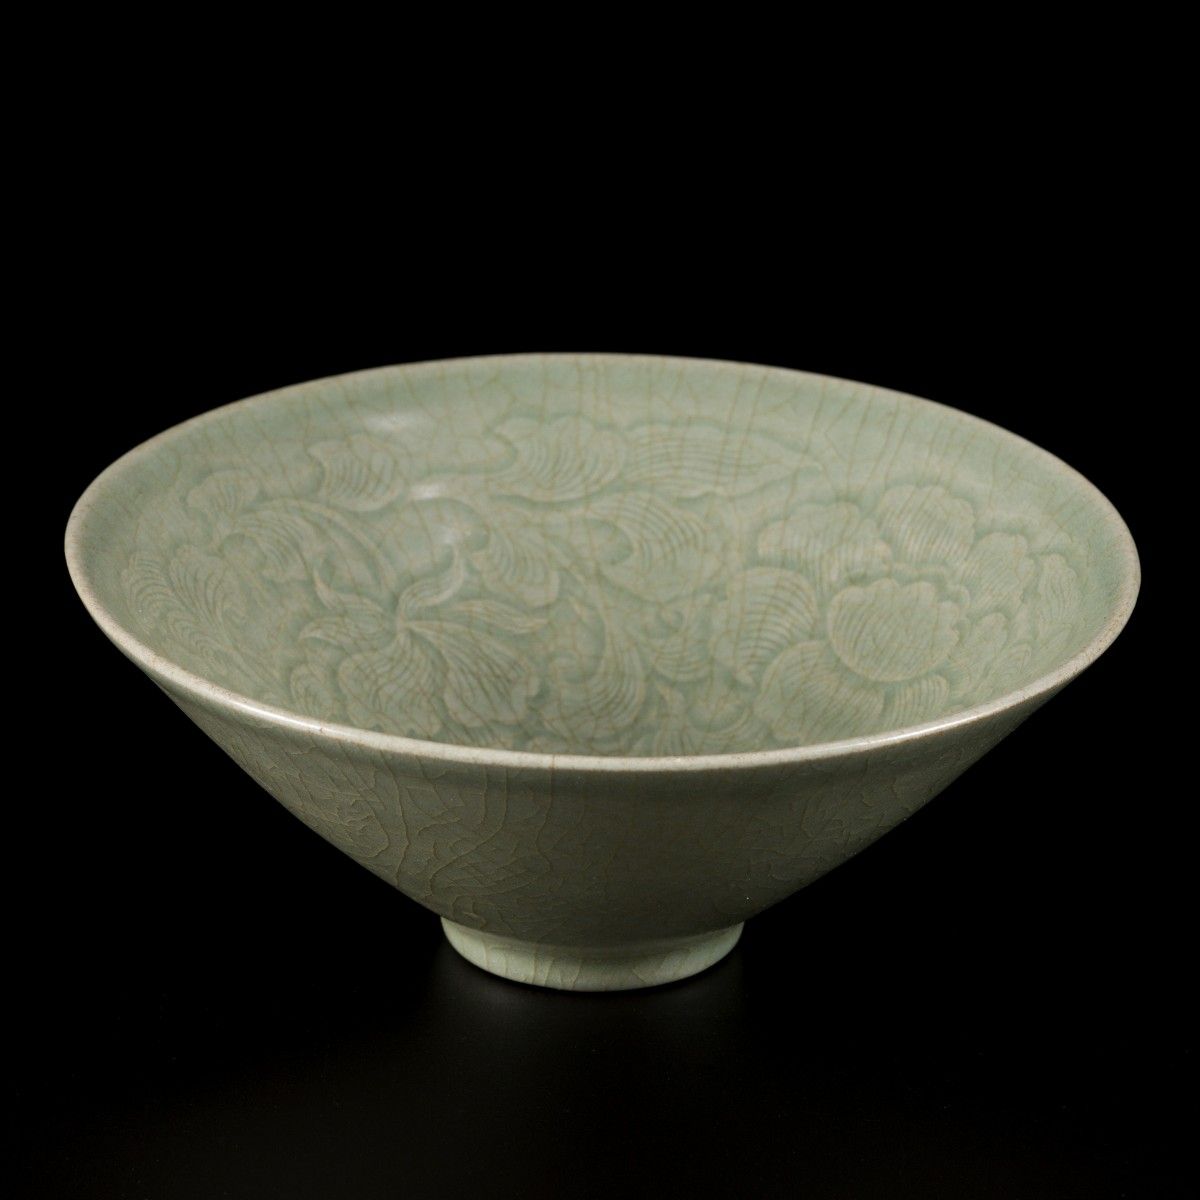 A celadon bowl, Korea, 15 century. Dim. 6 x 16 cm. Stima: € 1500 - € 2500.